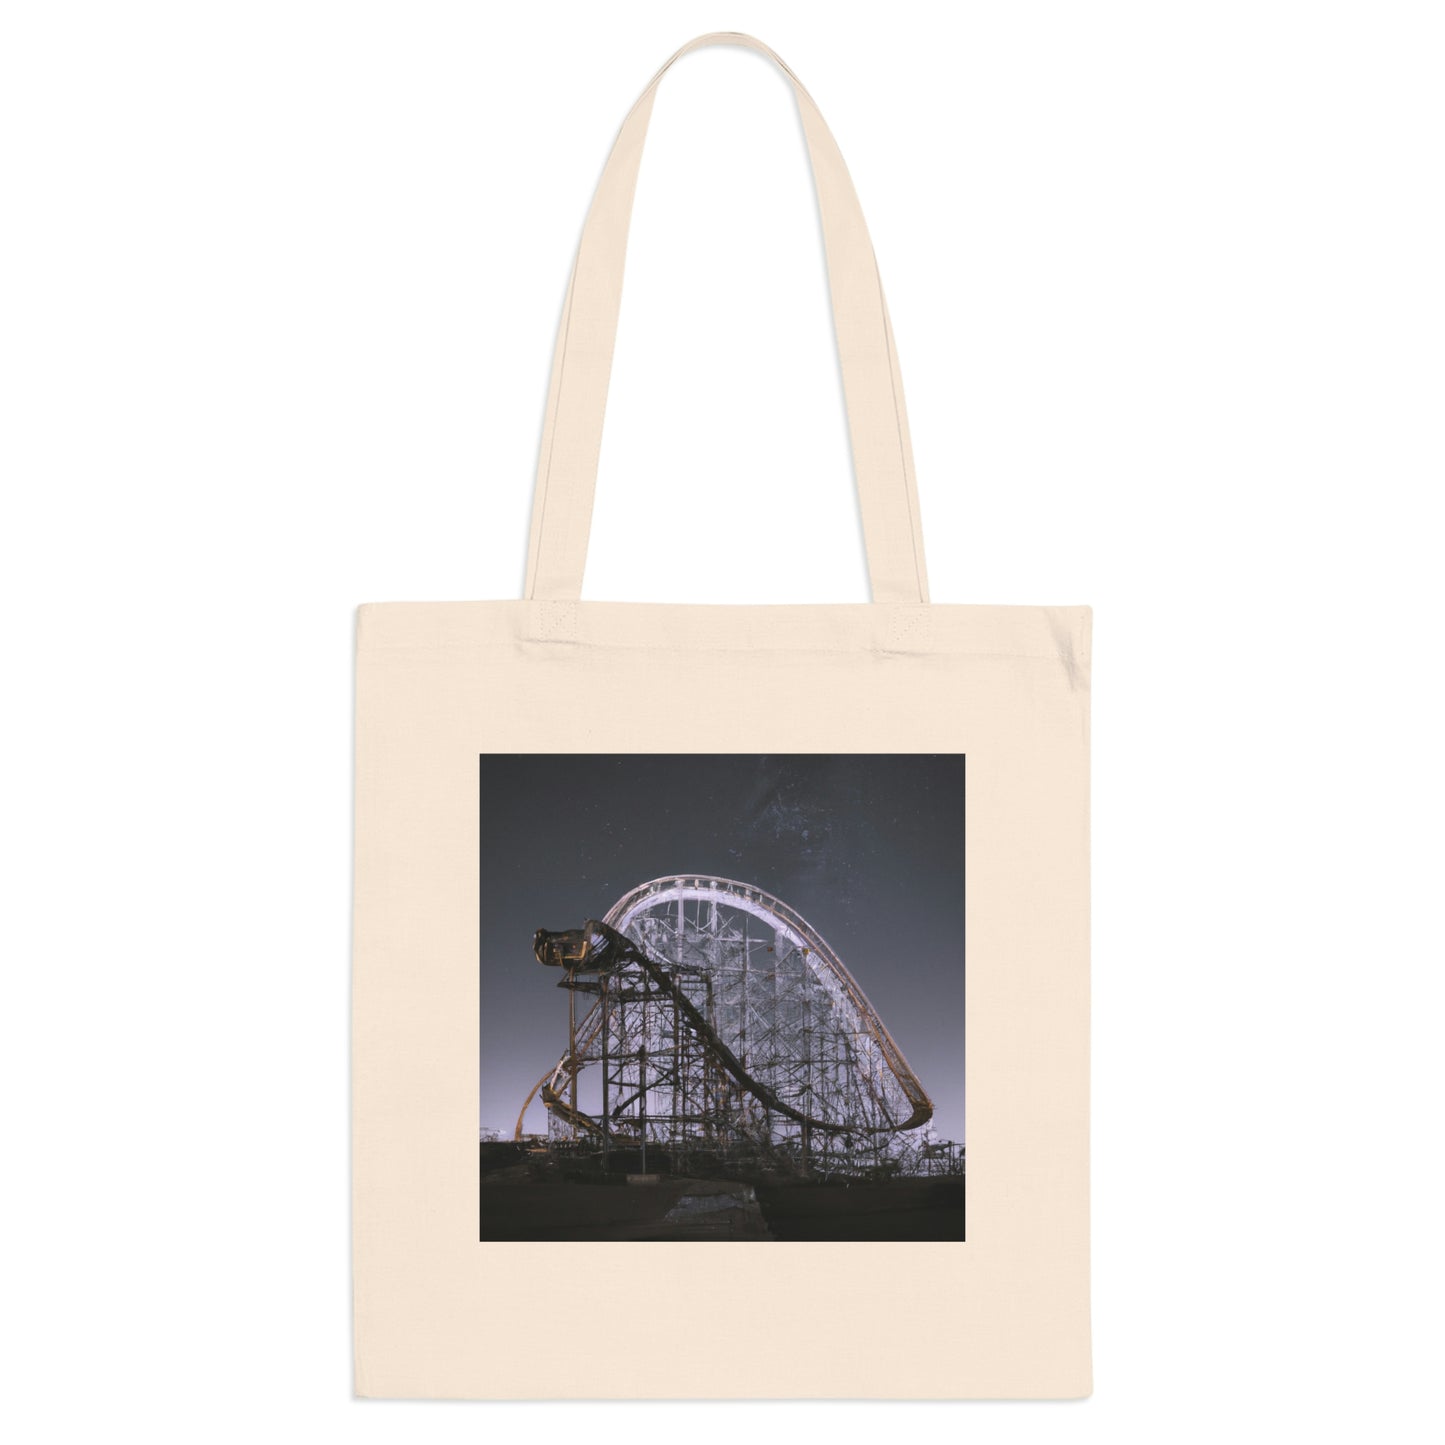 "Starstruck Rollercoaster" - The Alien Tote Bag